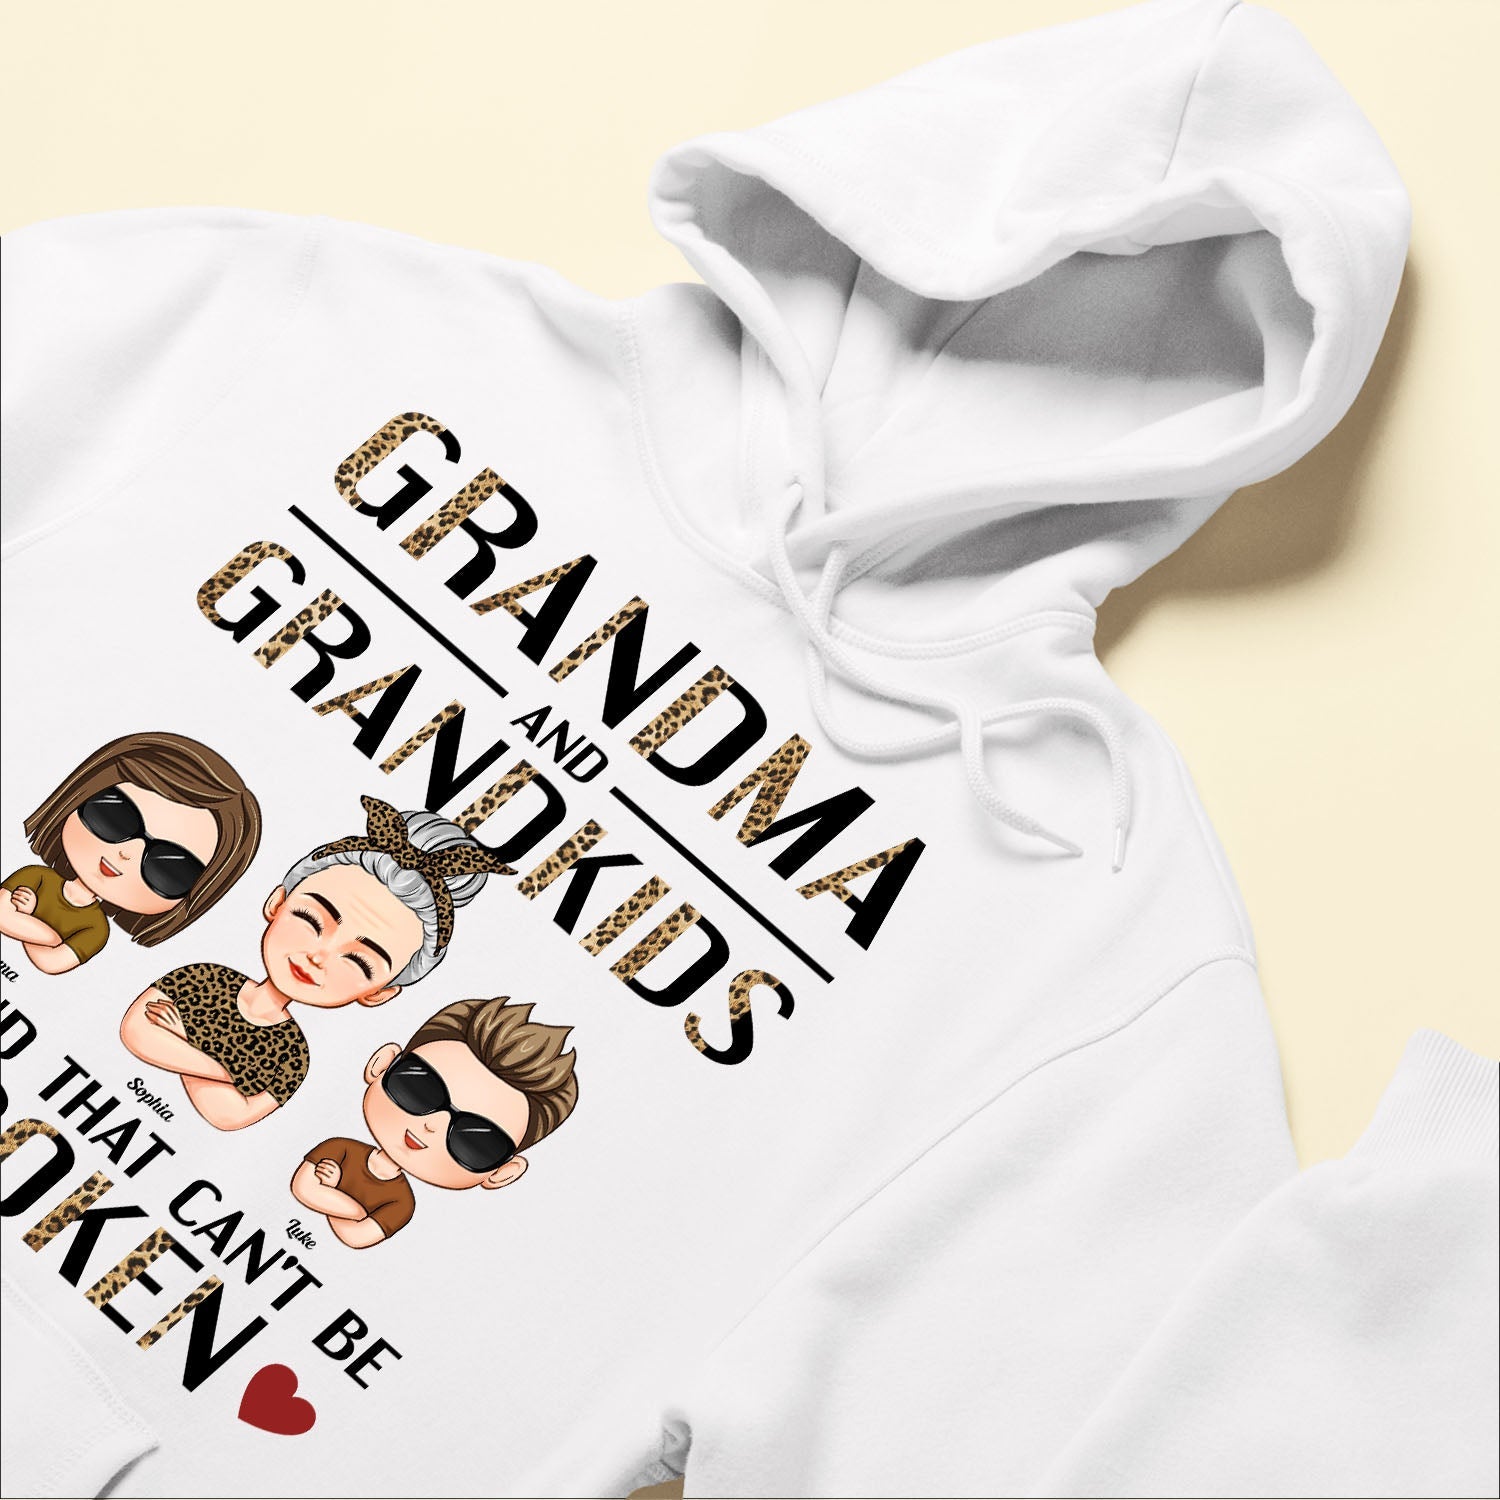 Grandma And Grandkids Unbreakable Bond Personalized Shirt 1 8